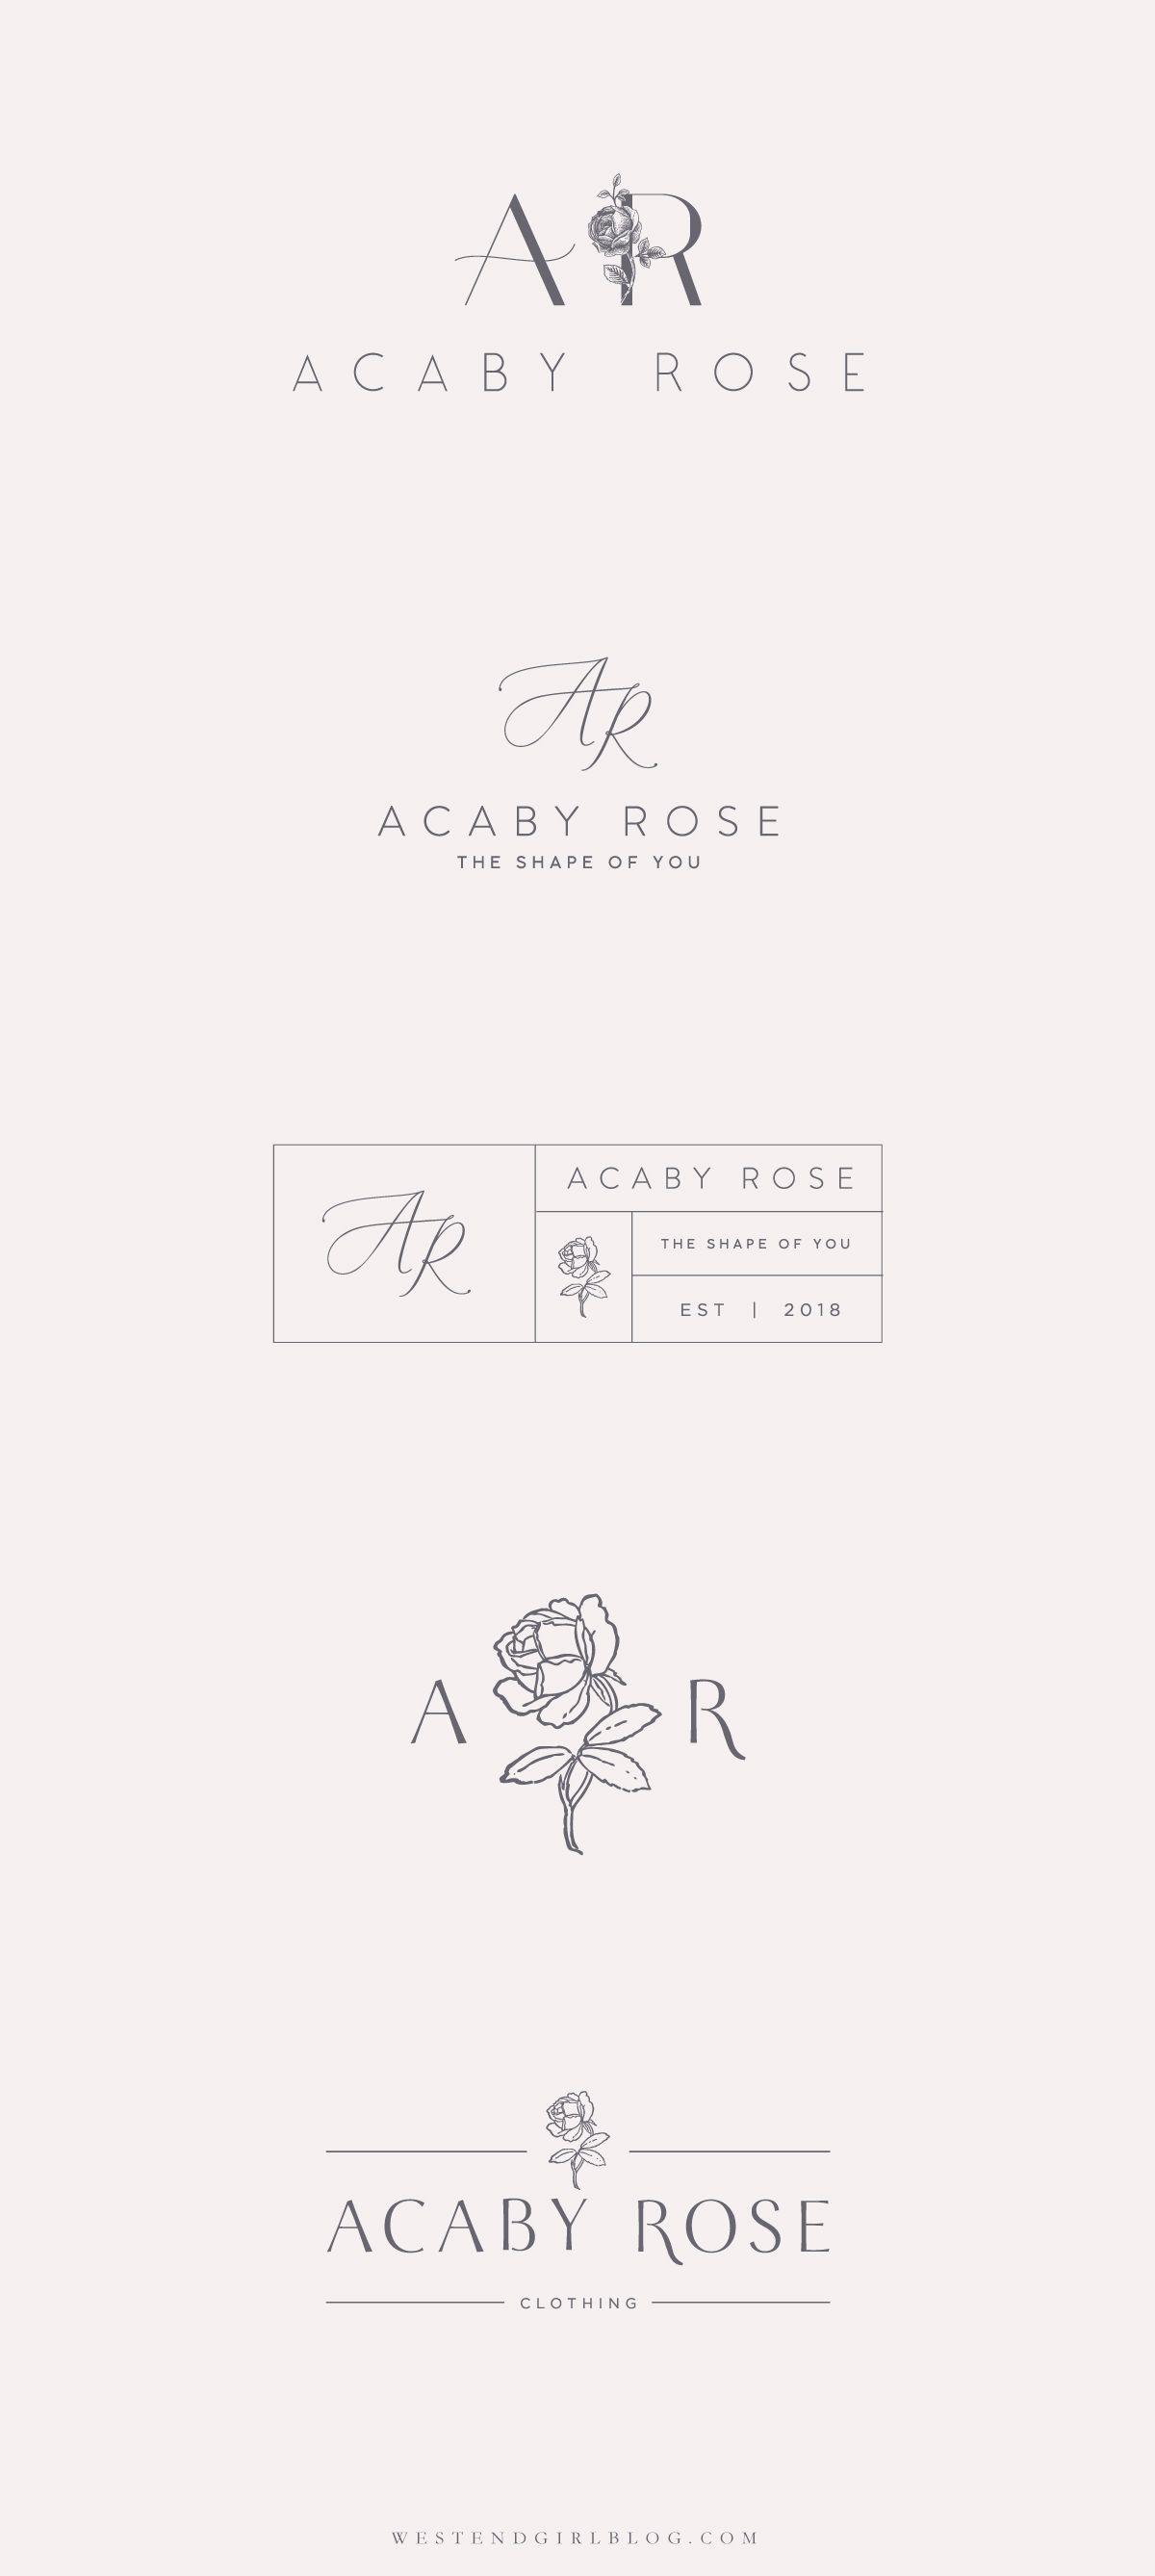 Rose Clothing Logo - Acaby rose clothing logo, branding design, logo options for rose ...